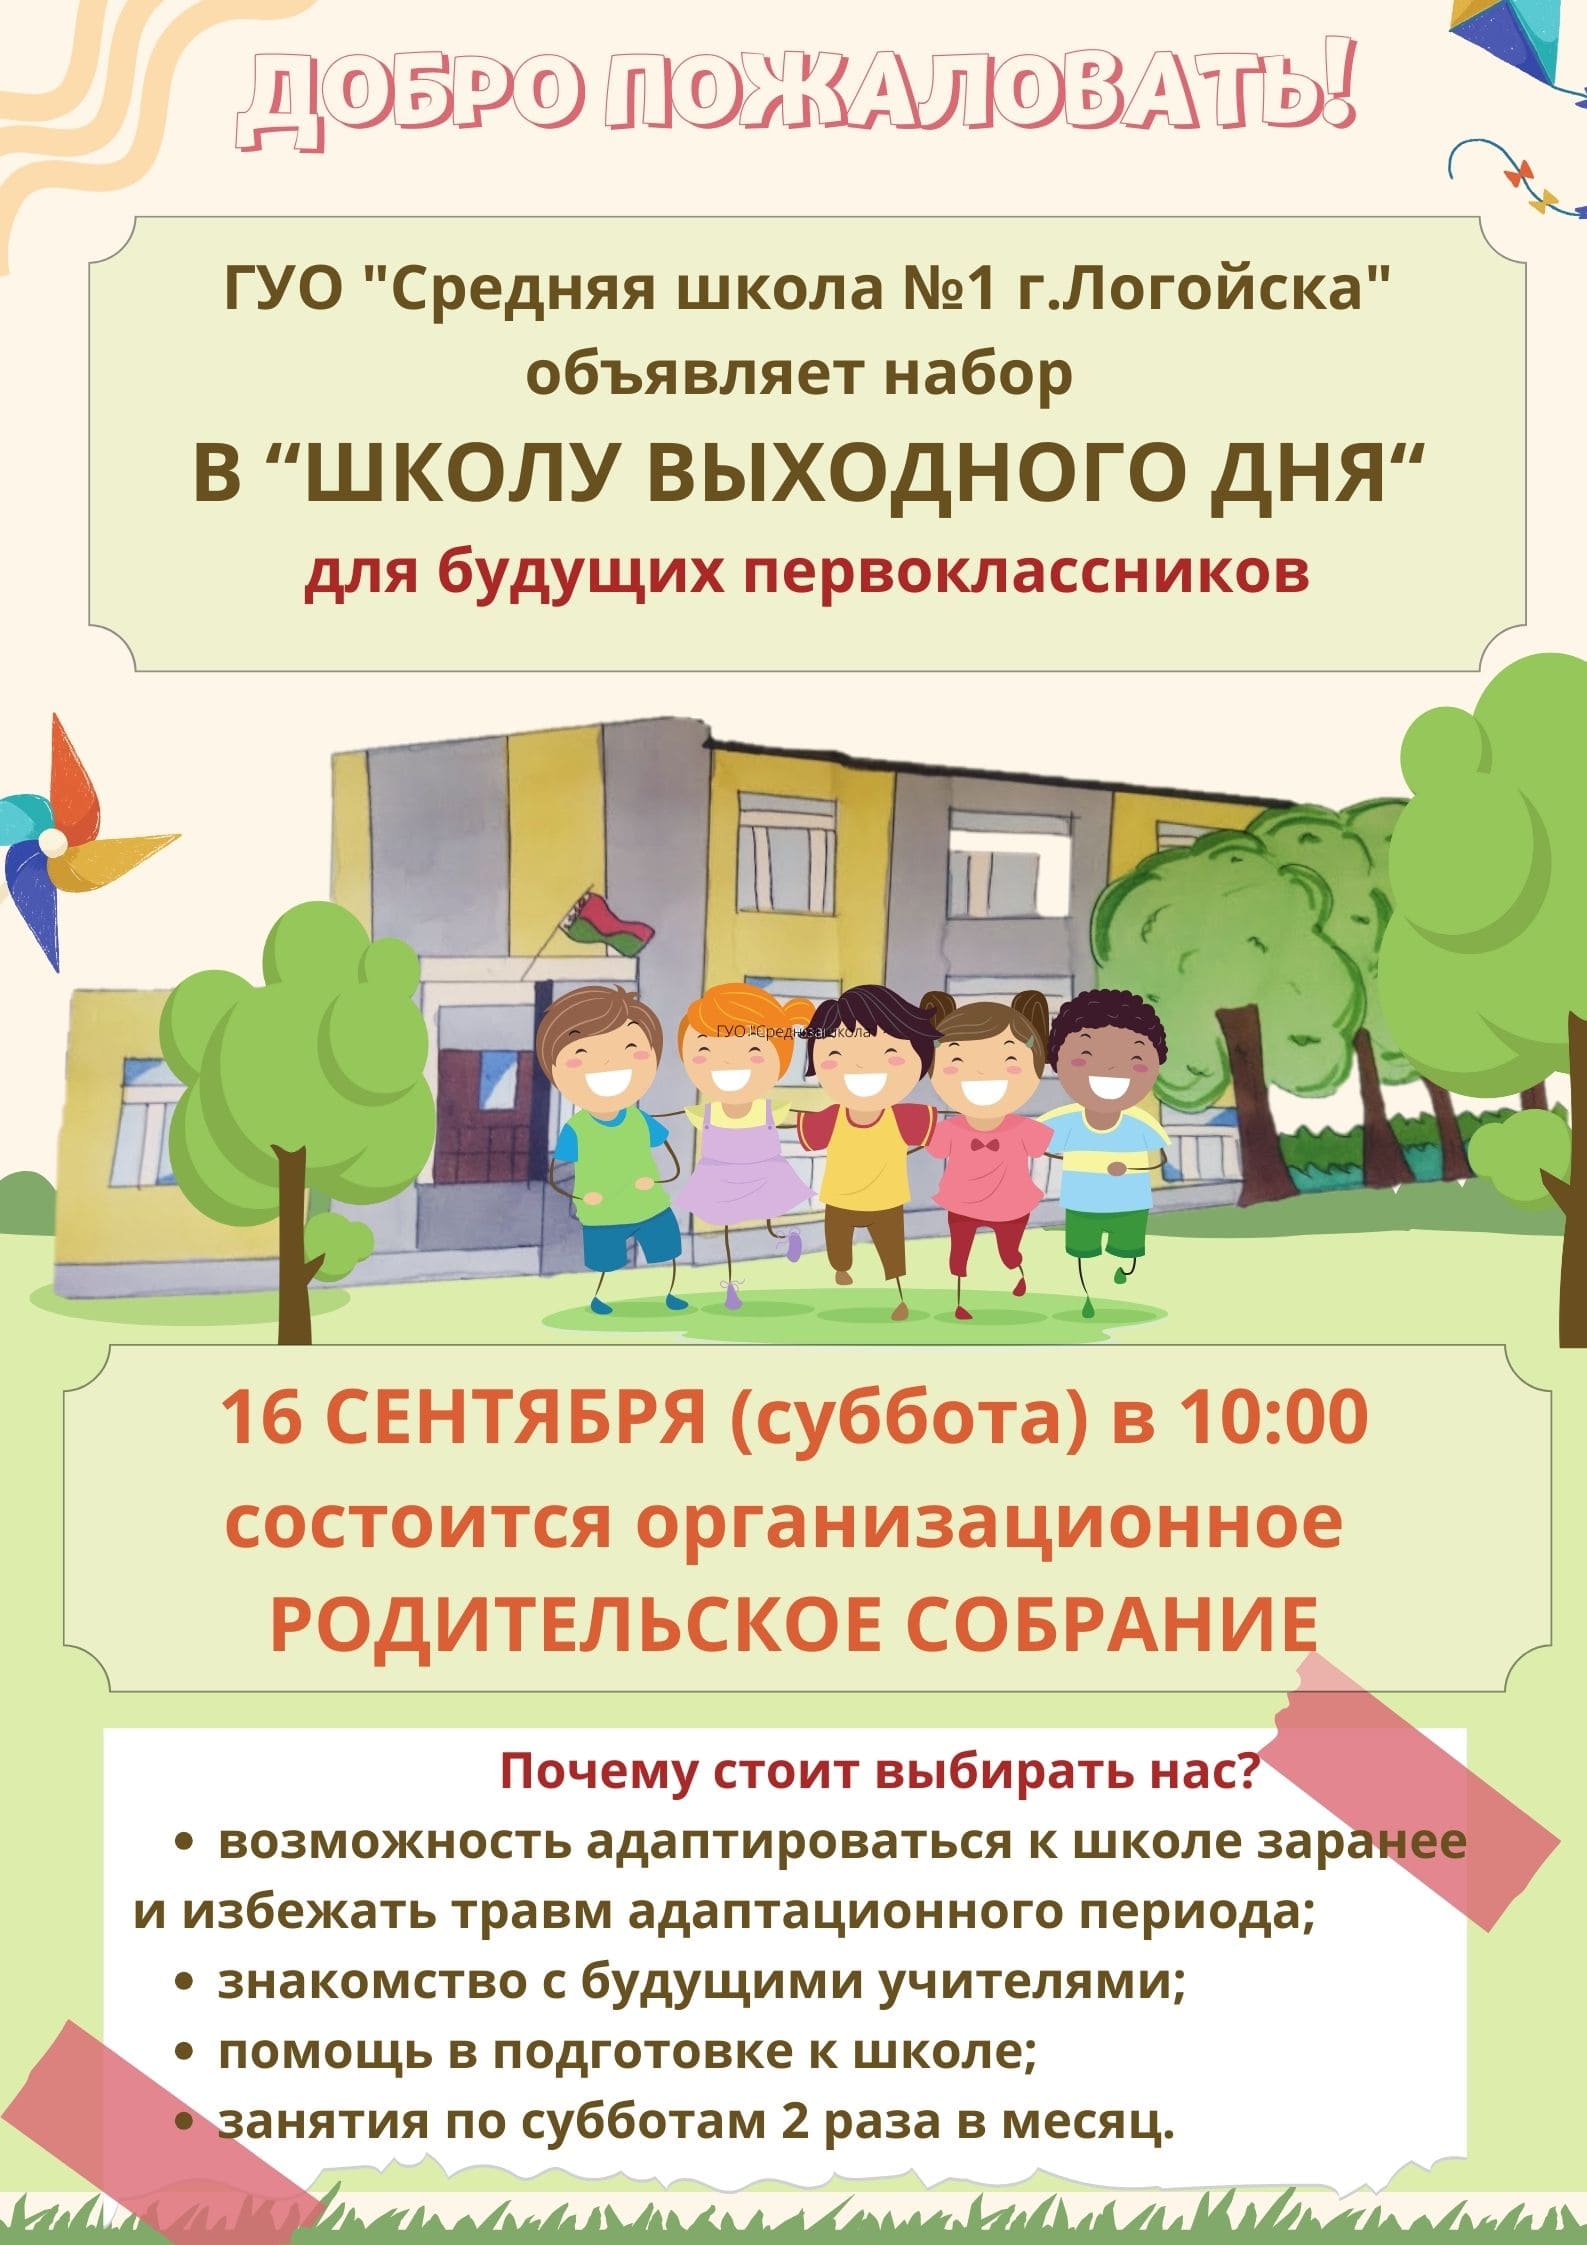 Beige Colorful School Enrollment Poster (1) (1)